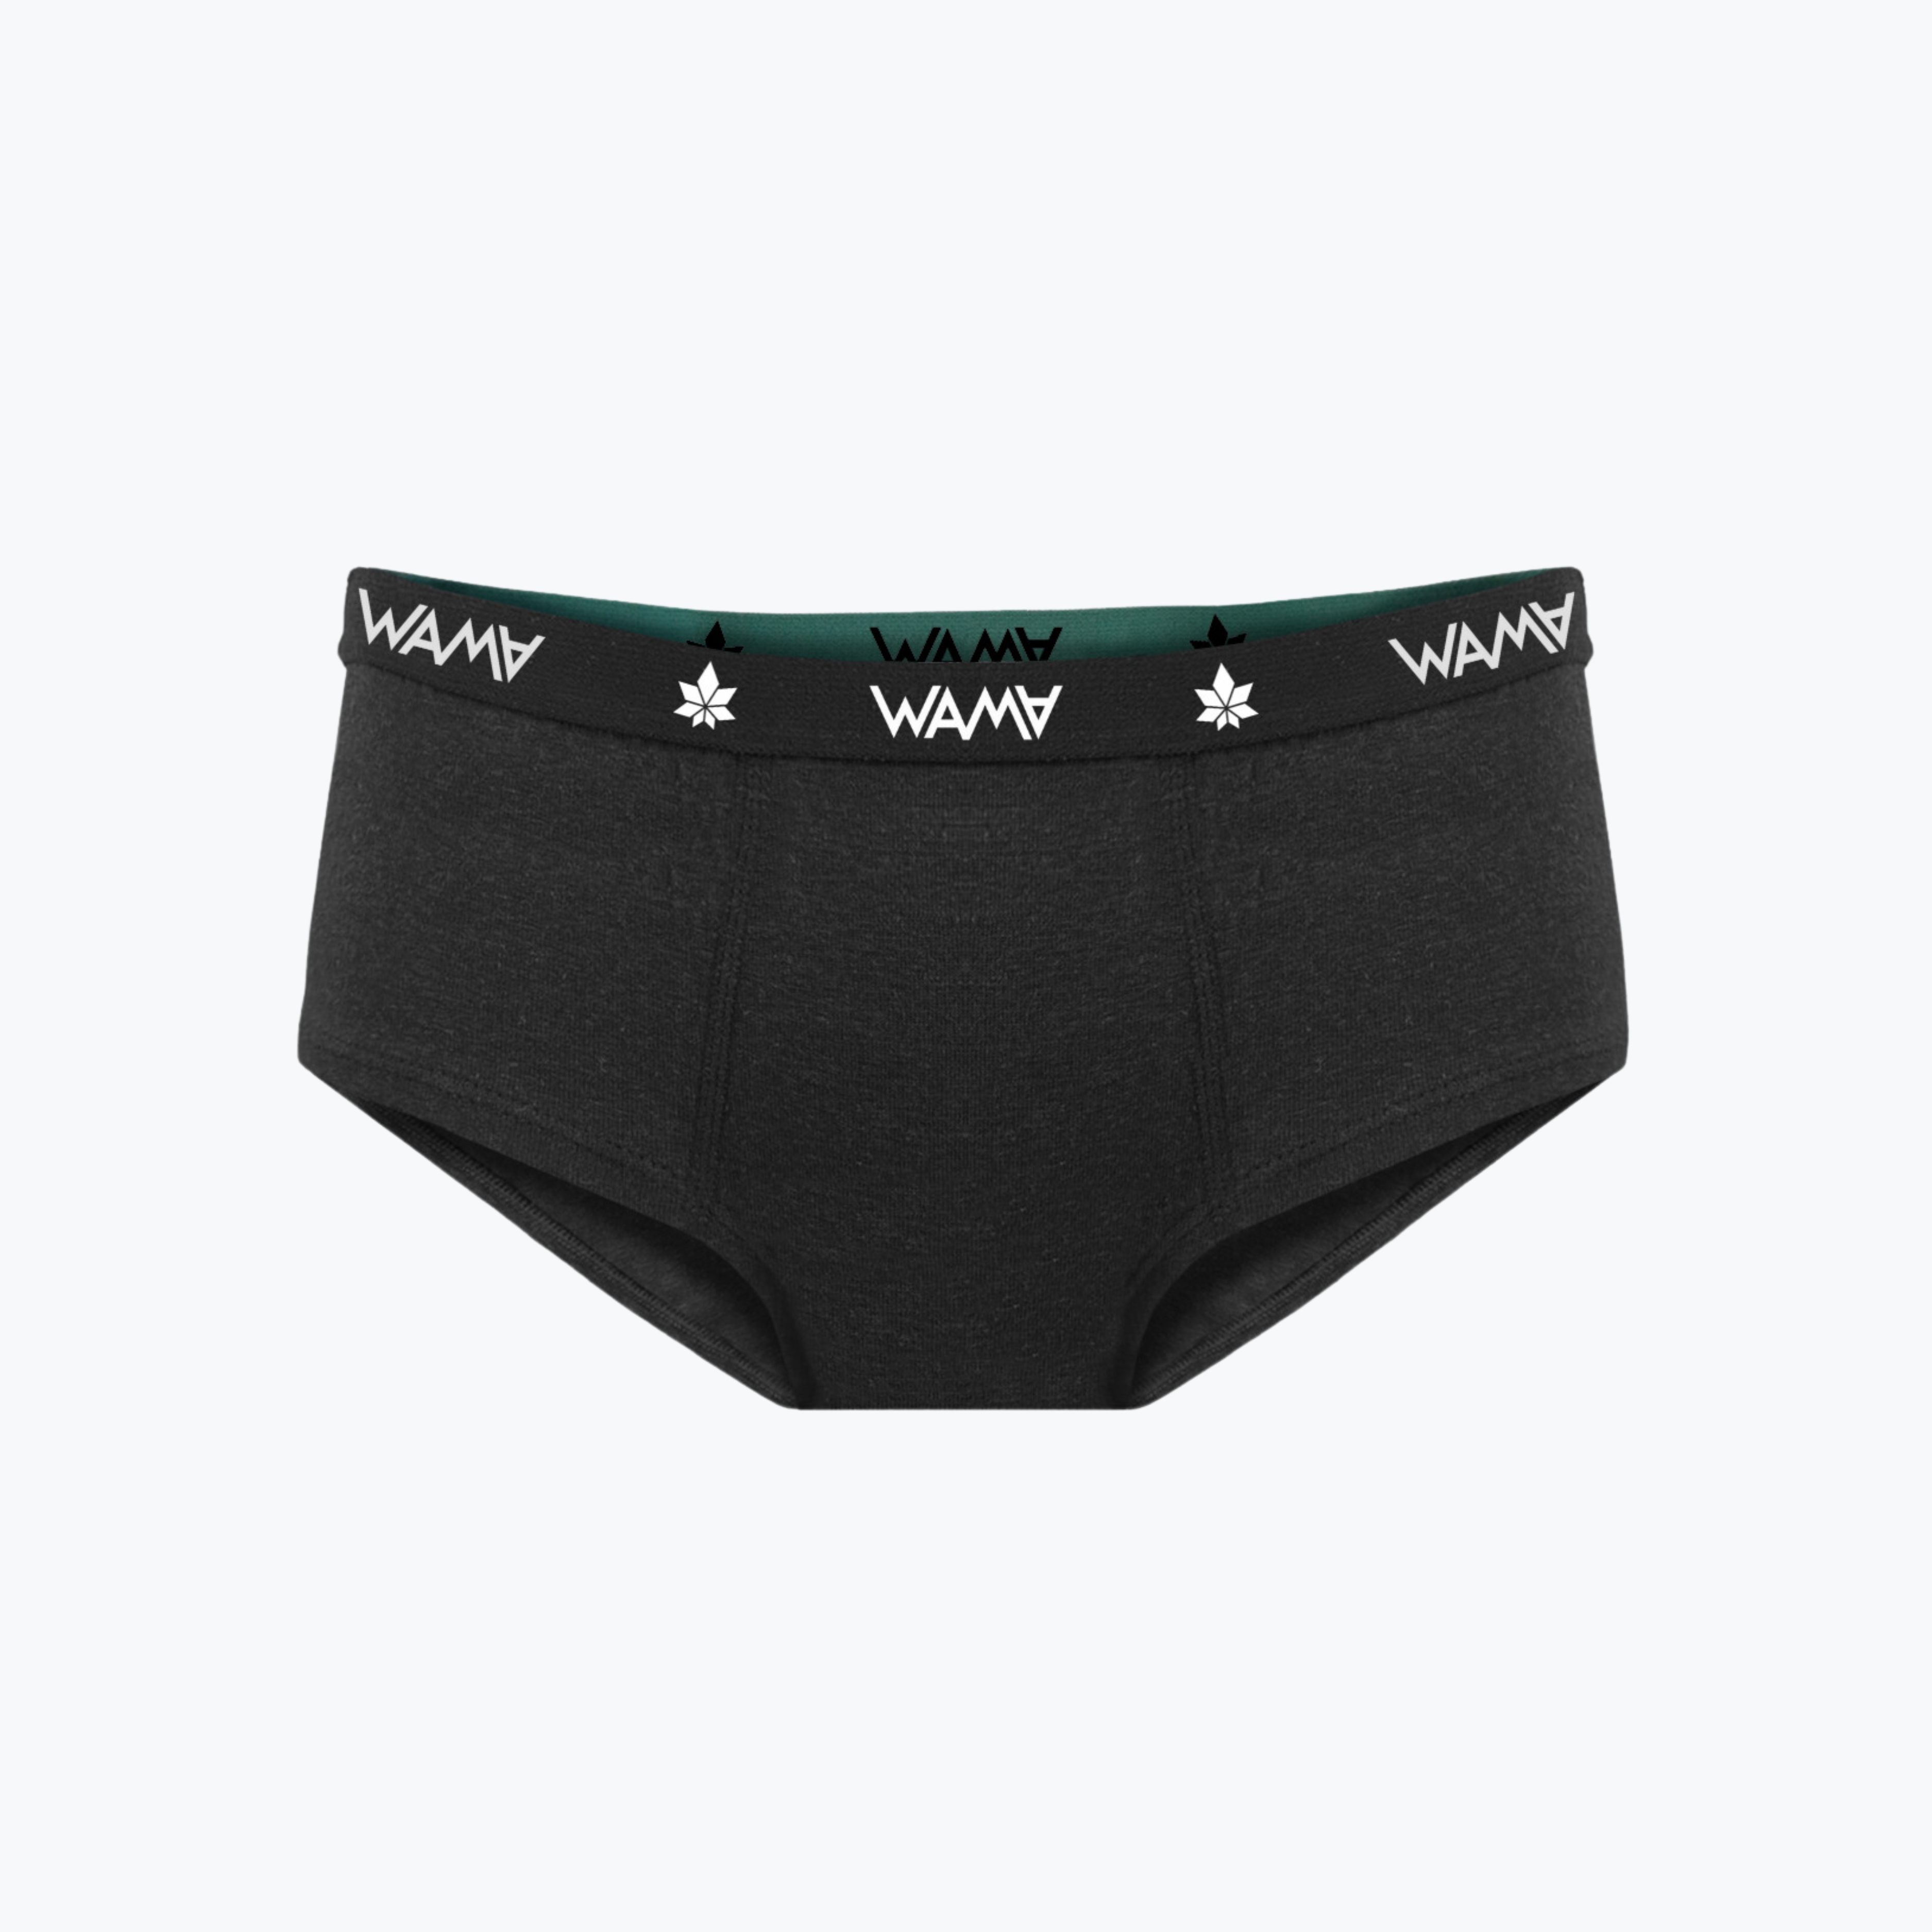 WAMA Underwear - The Green Hub